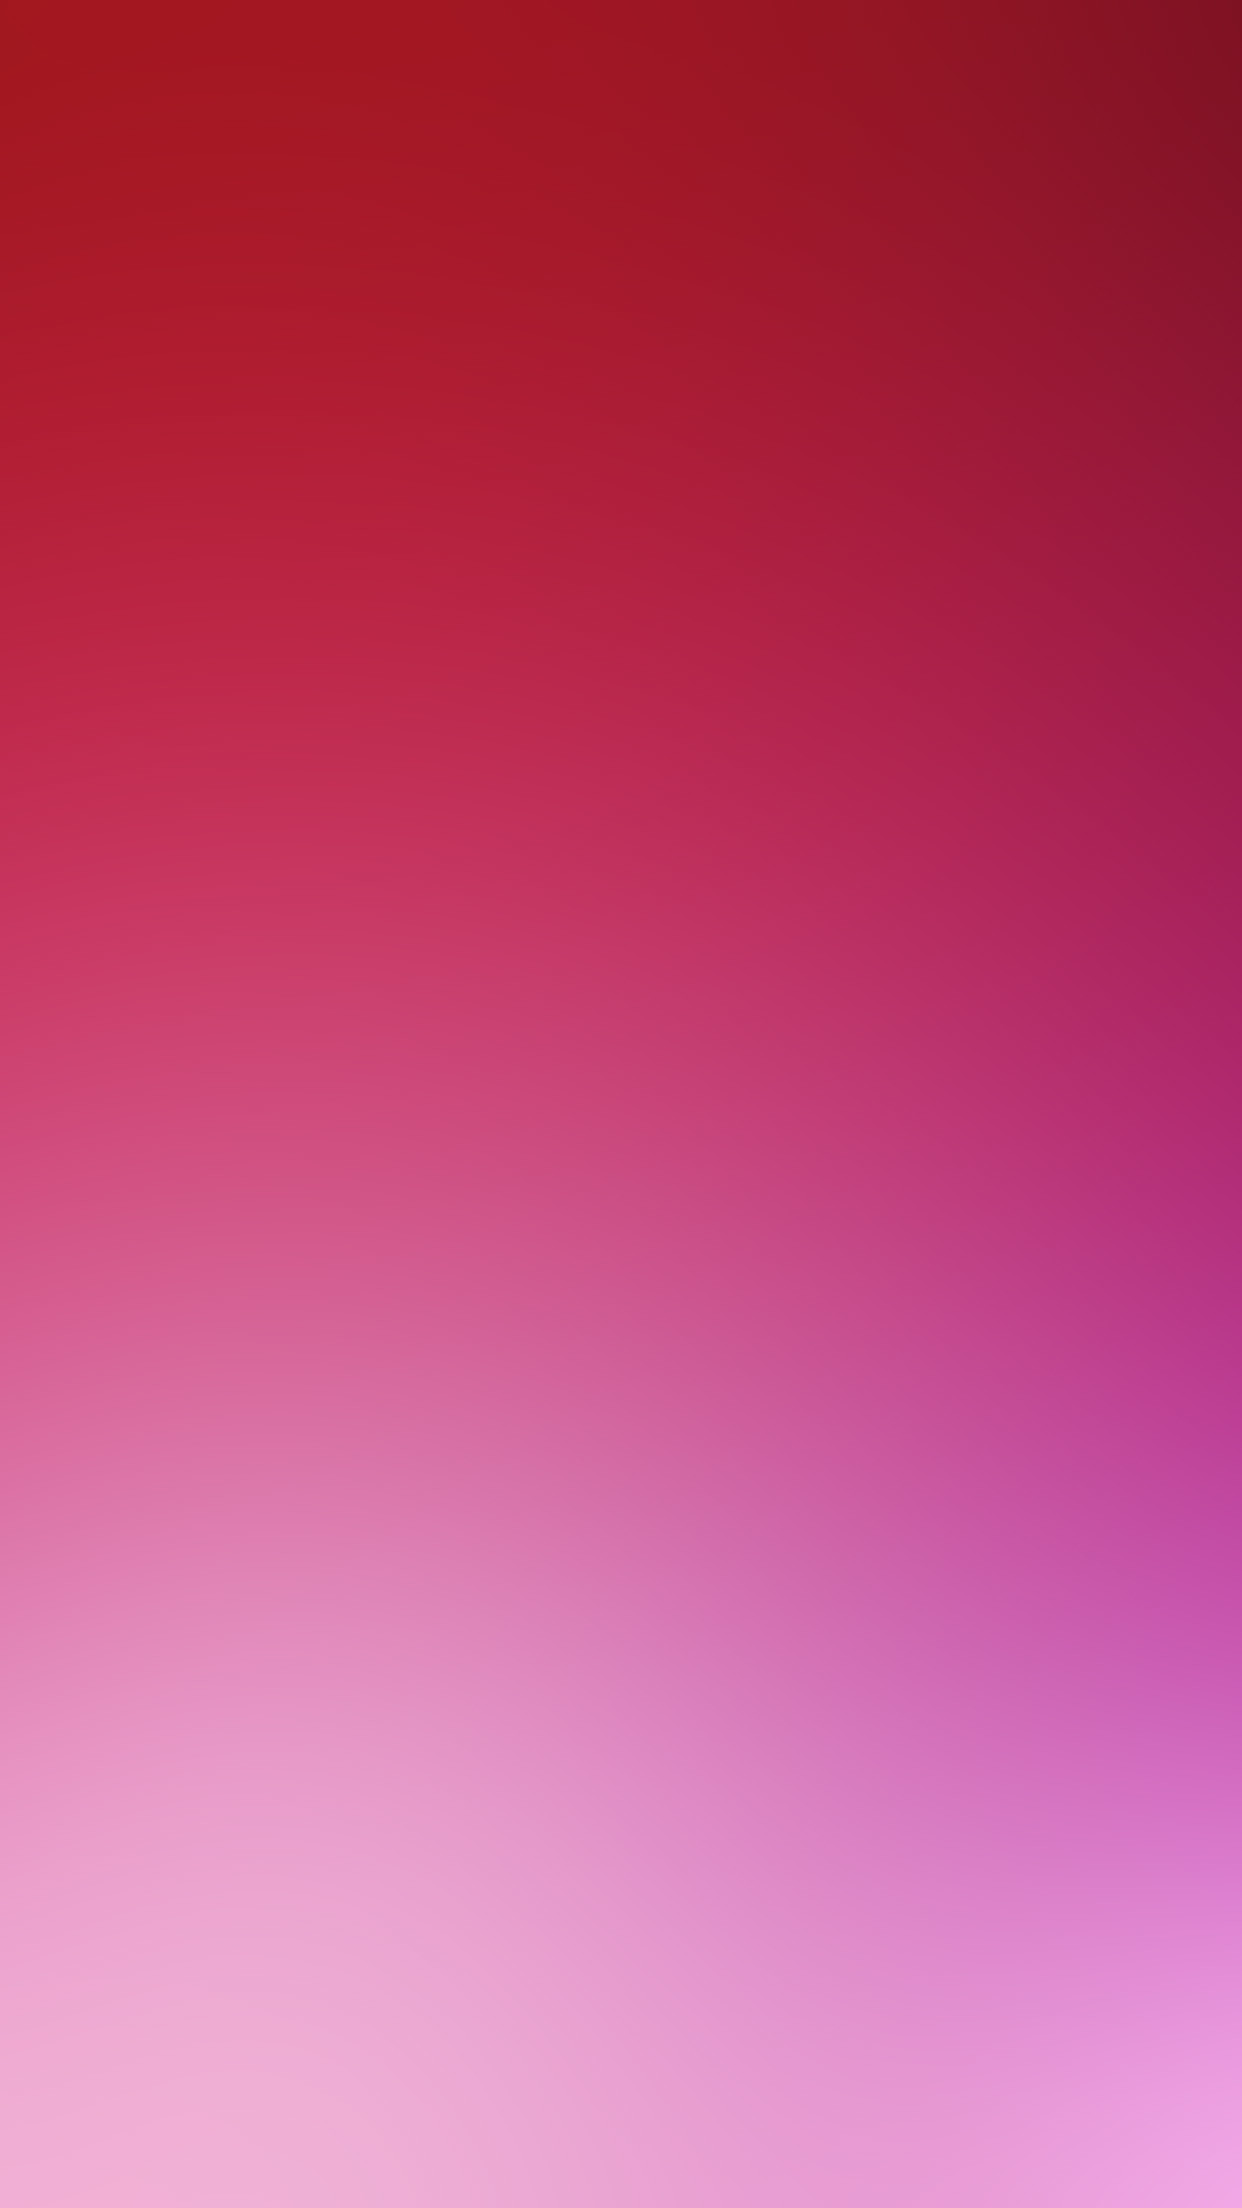 Plus Red Wallpaper Apple iPhone 6 – Bing images